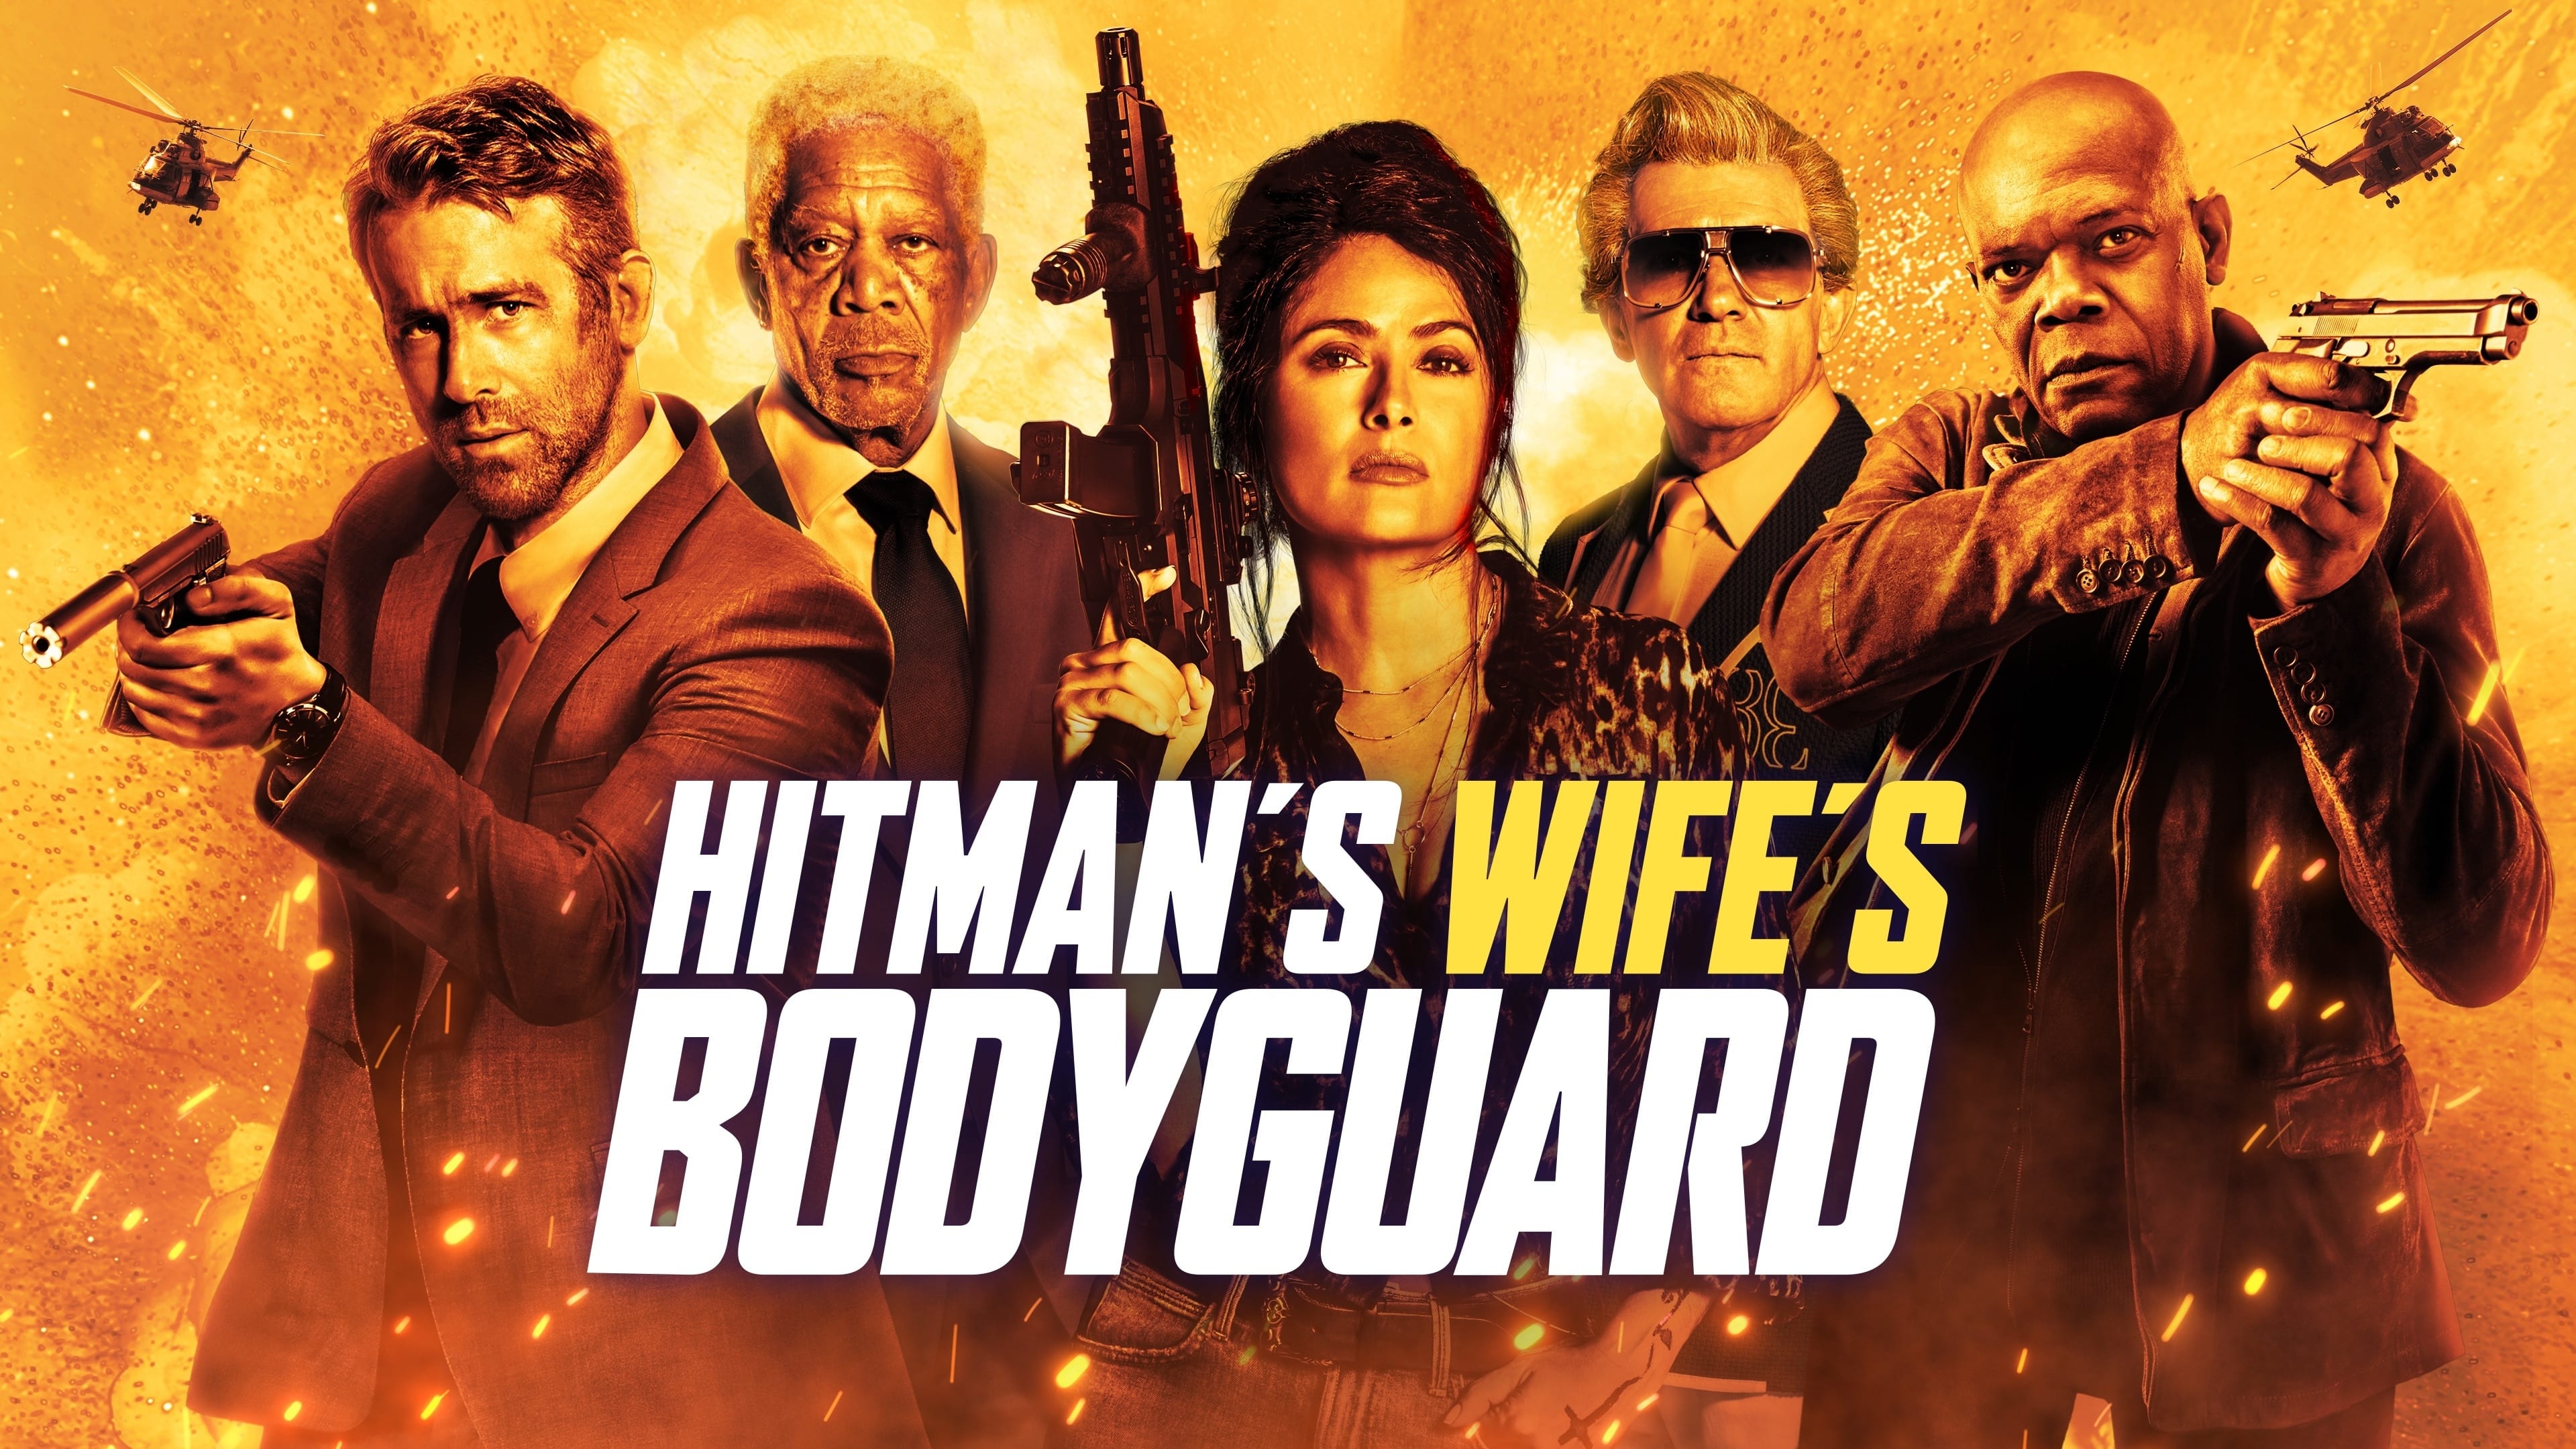 Hitman's Wife's Bodyguard Cast